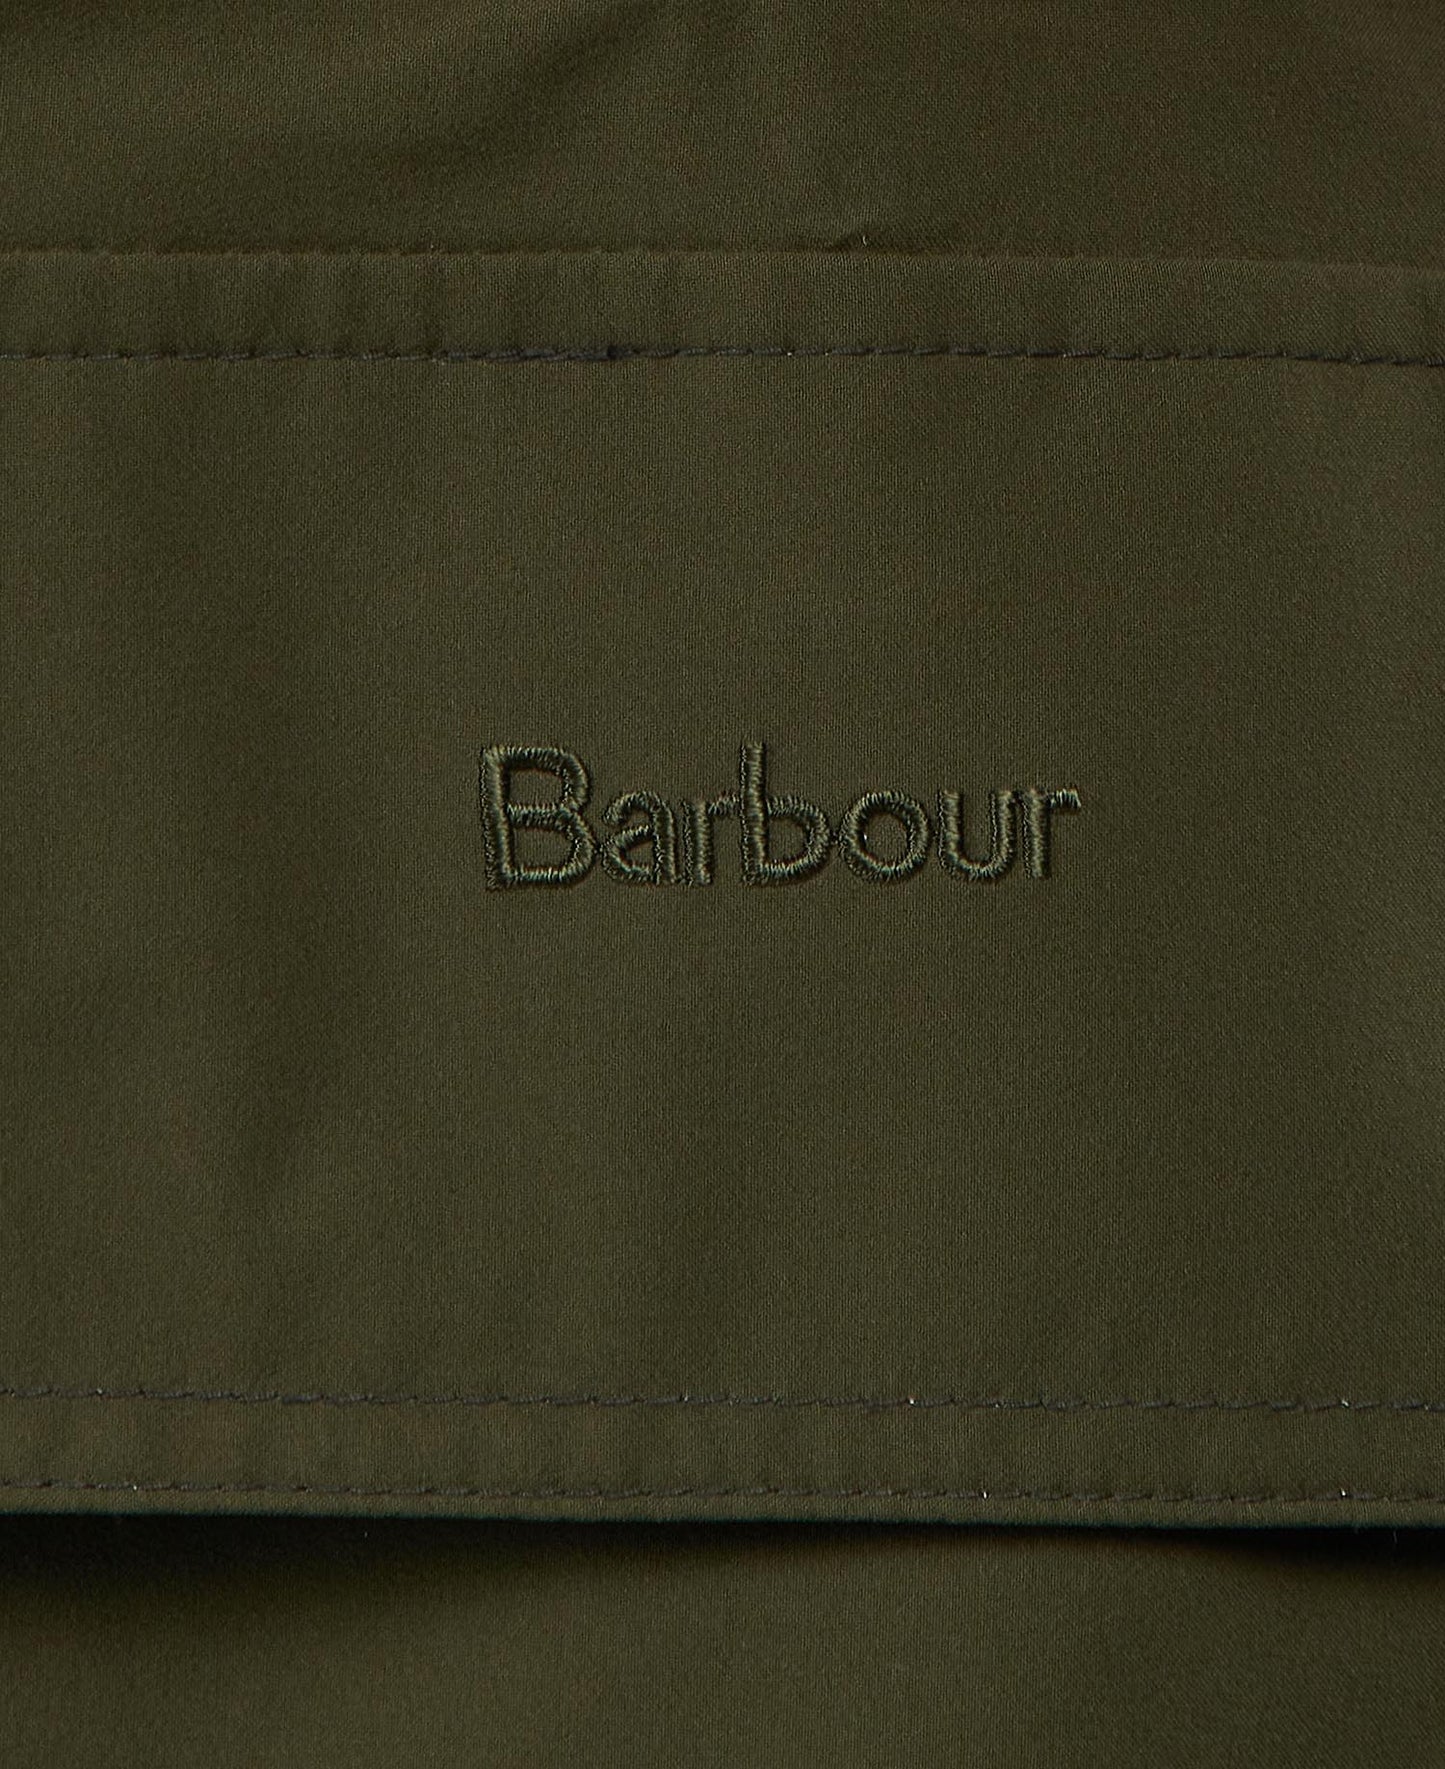 Barbour Clyde Jacket